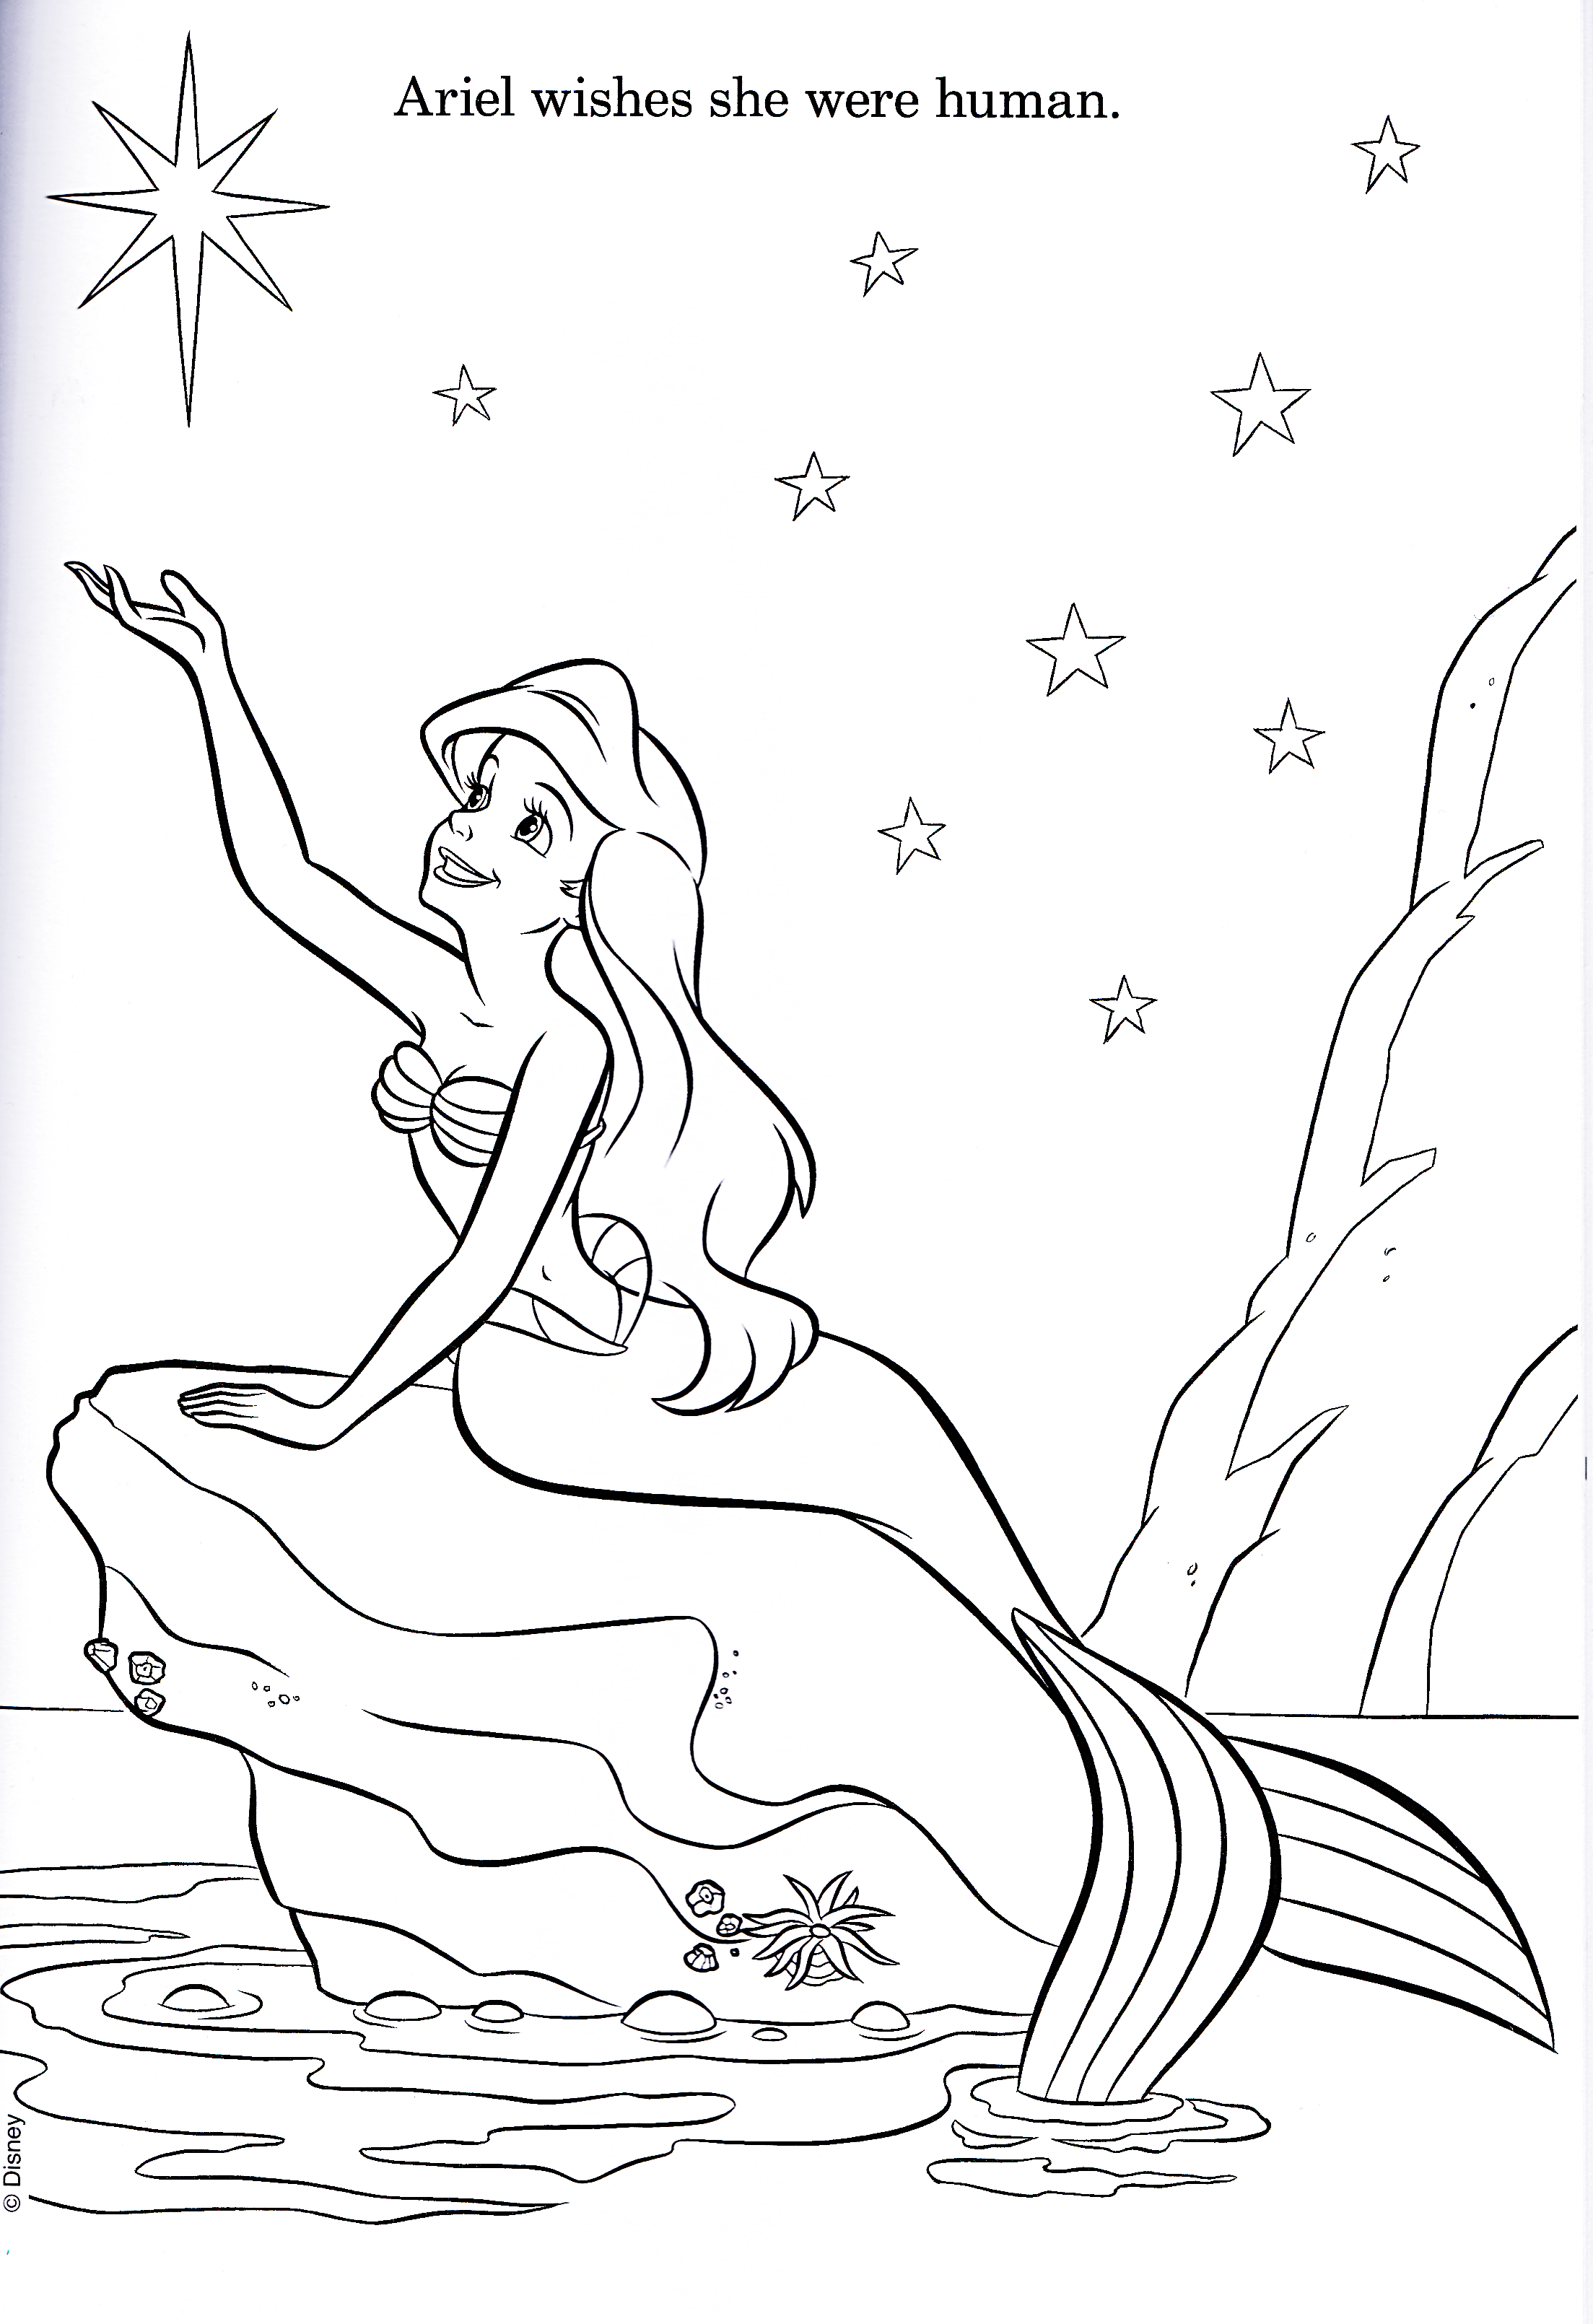 walt-disney-coloring-pages-princess-ariel-walt-disney-characters-photo-38135735-fanpop